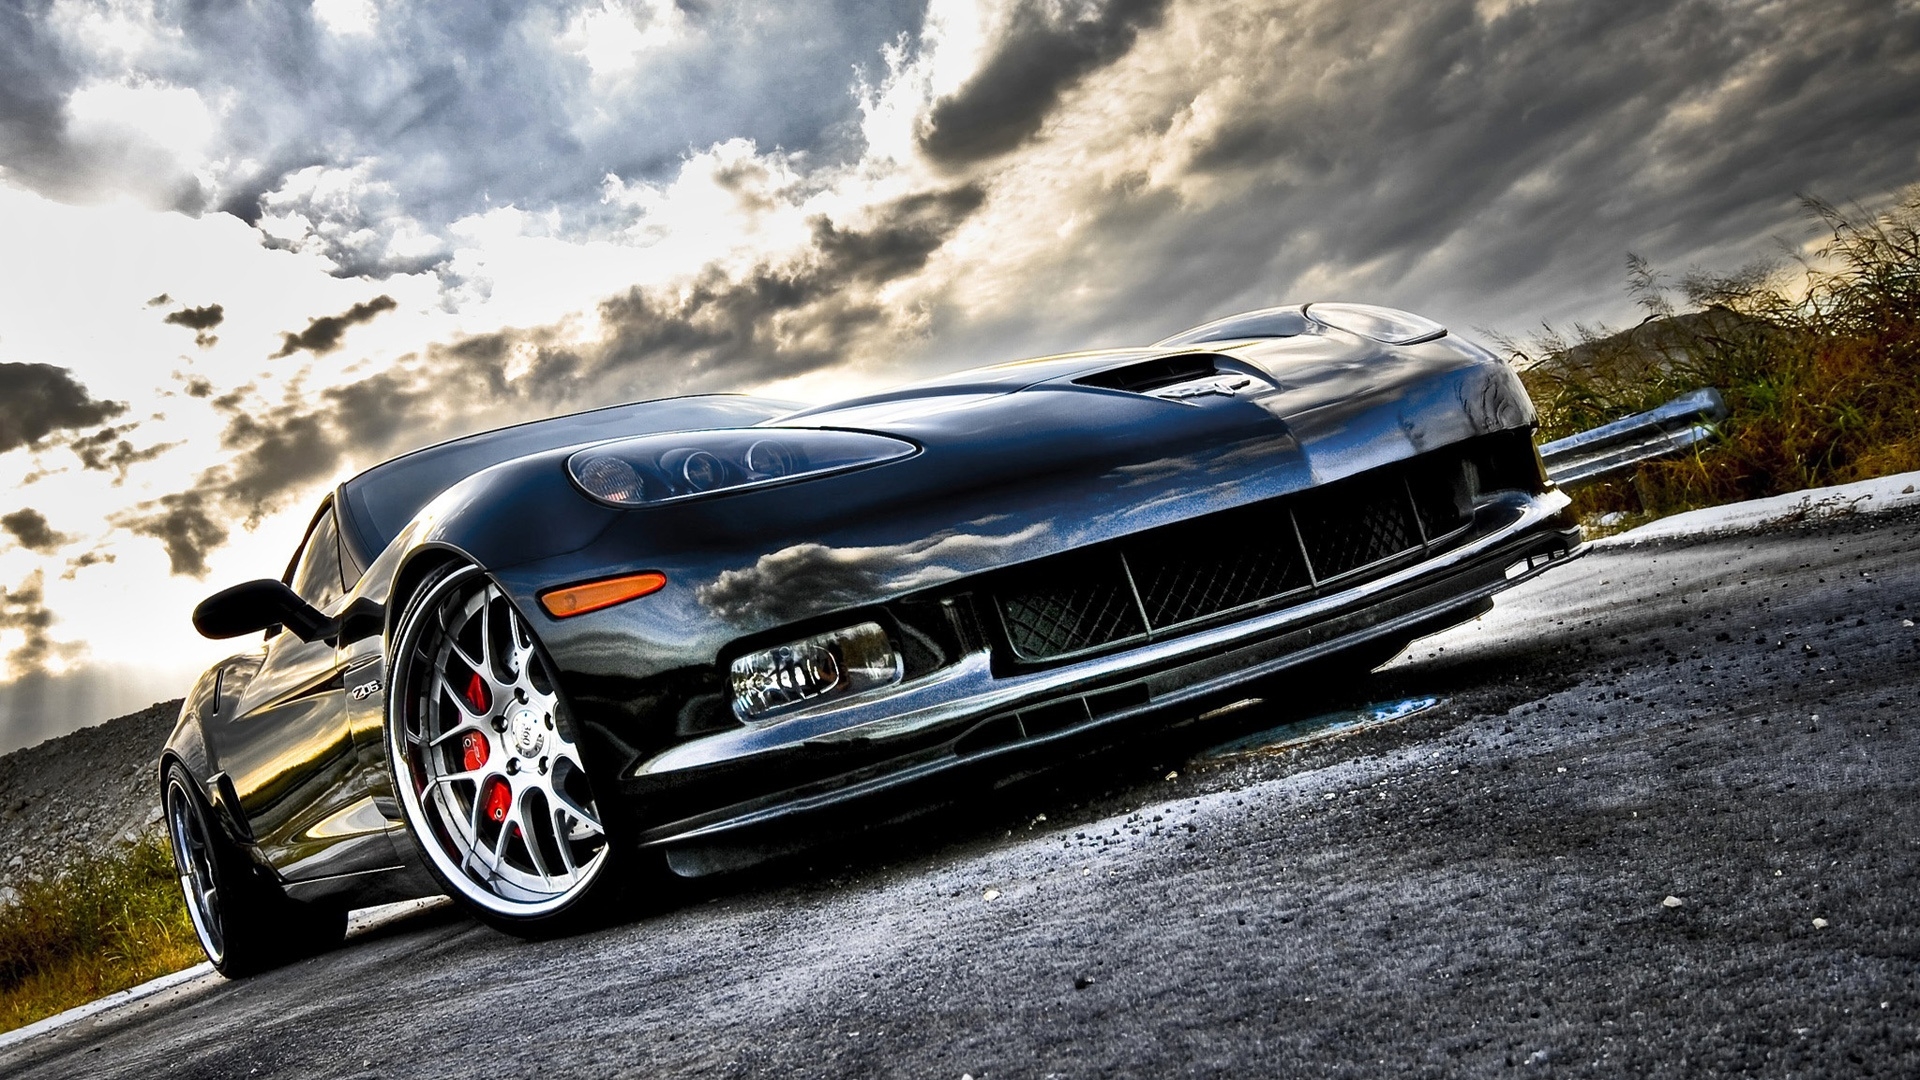 HD Wallpaper 1080p Desktop Corvette Super Sport